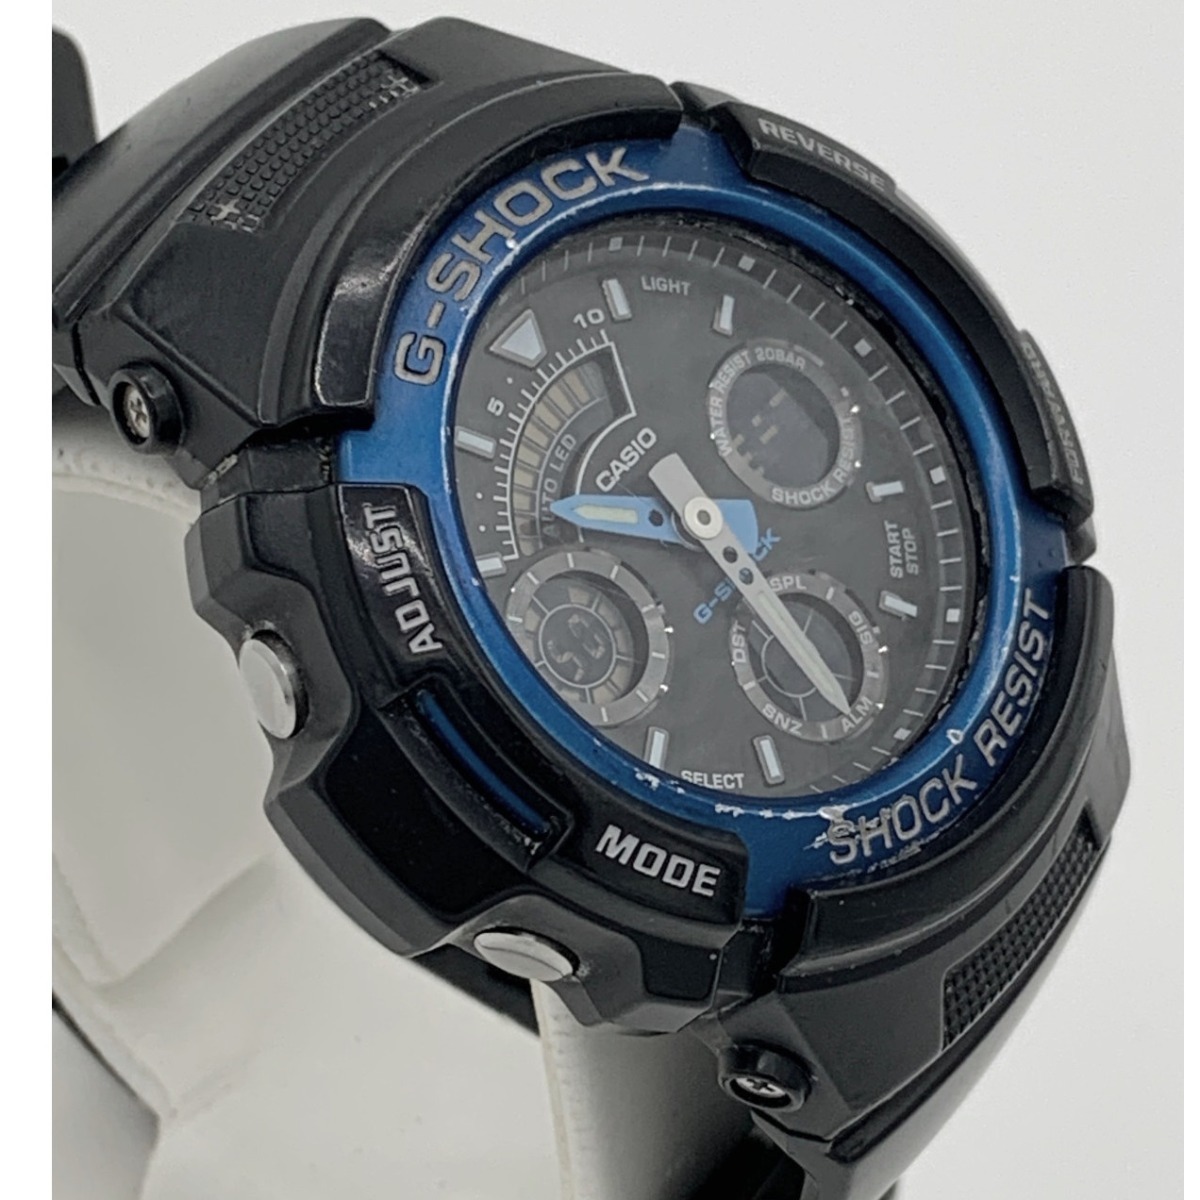 〇〇 CASIO カシオ Gショック クォーツ 腕時計 AW-591-2AJF ブラック x ブルー やや傷や汚れあり_画像4